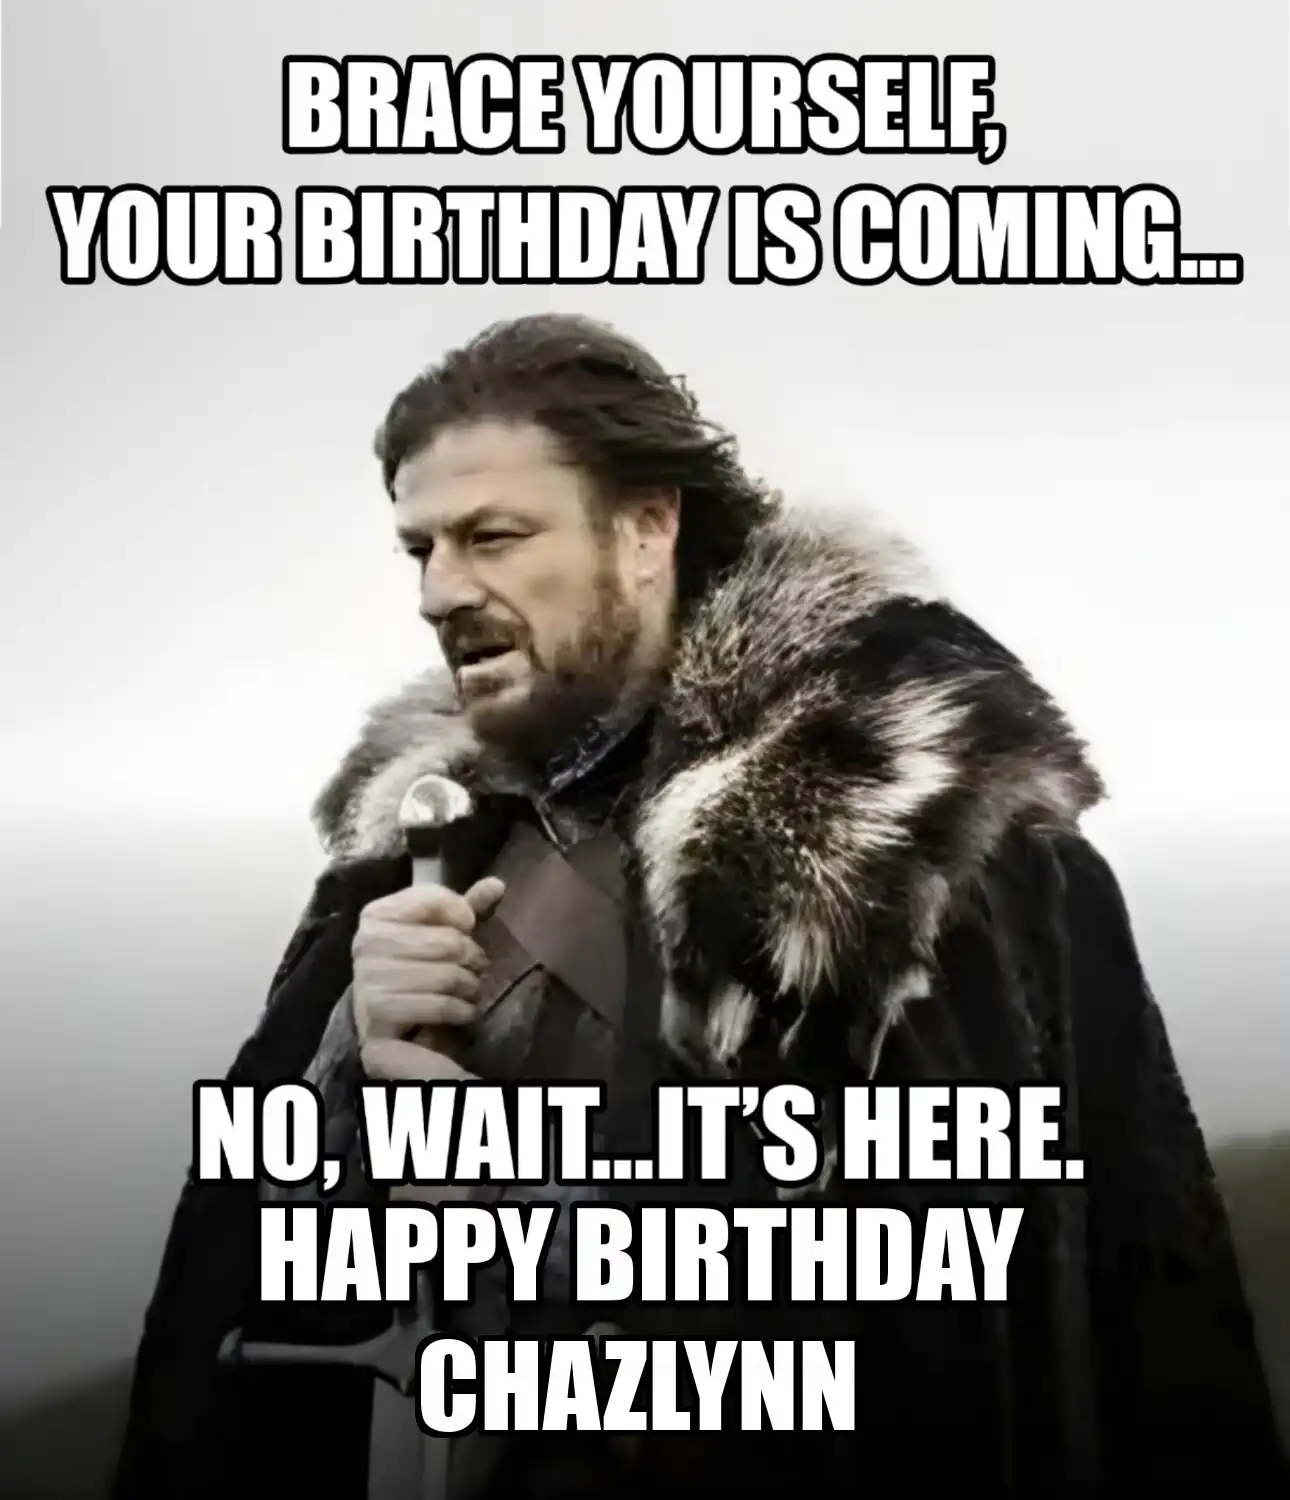 Happy Birthday Chazlynn Brace Yourself Your Birthday Is Coming Meme